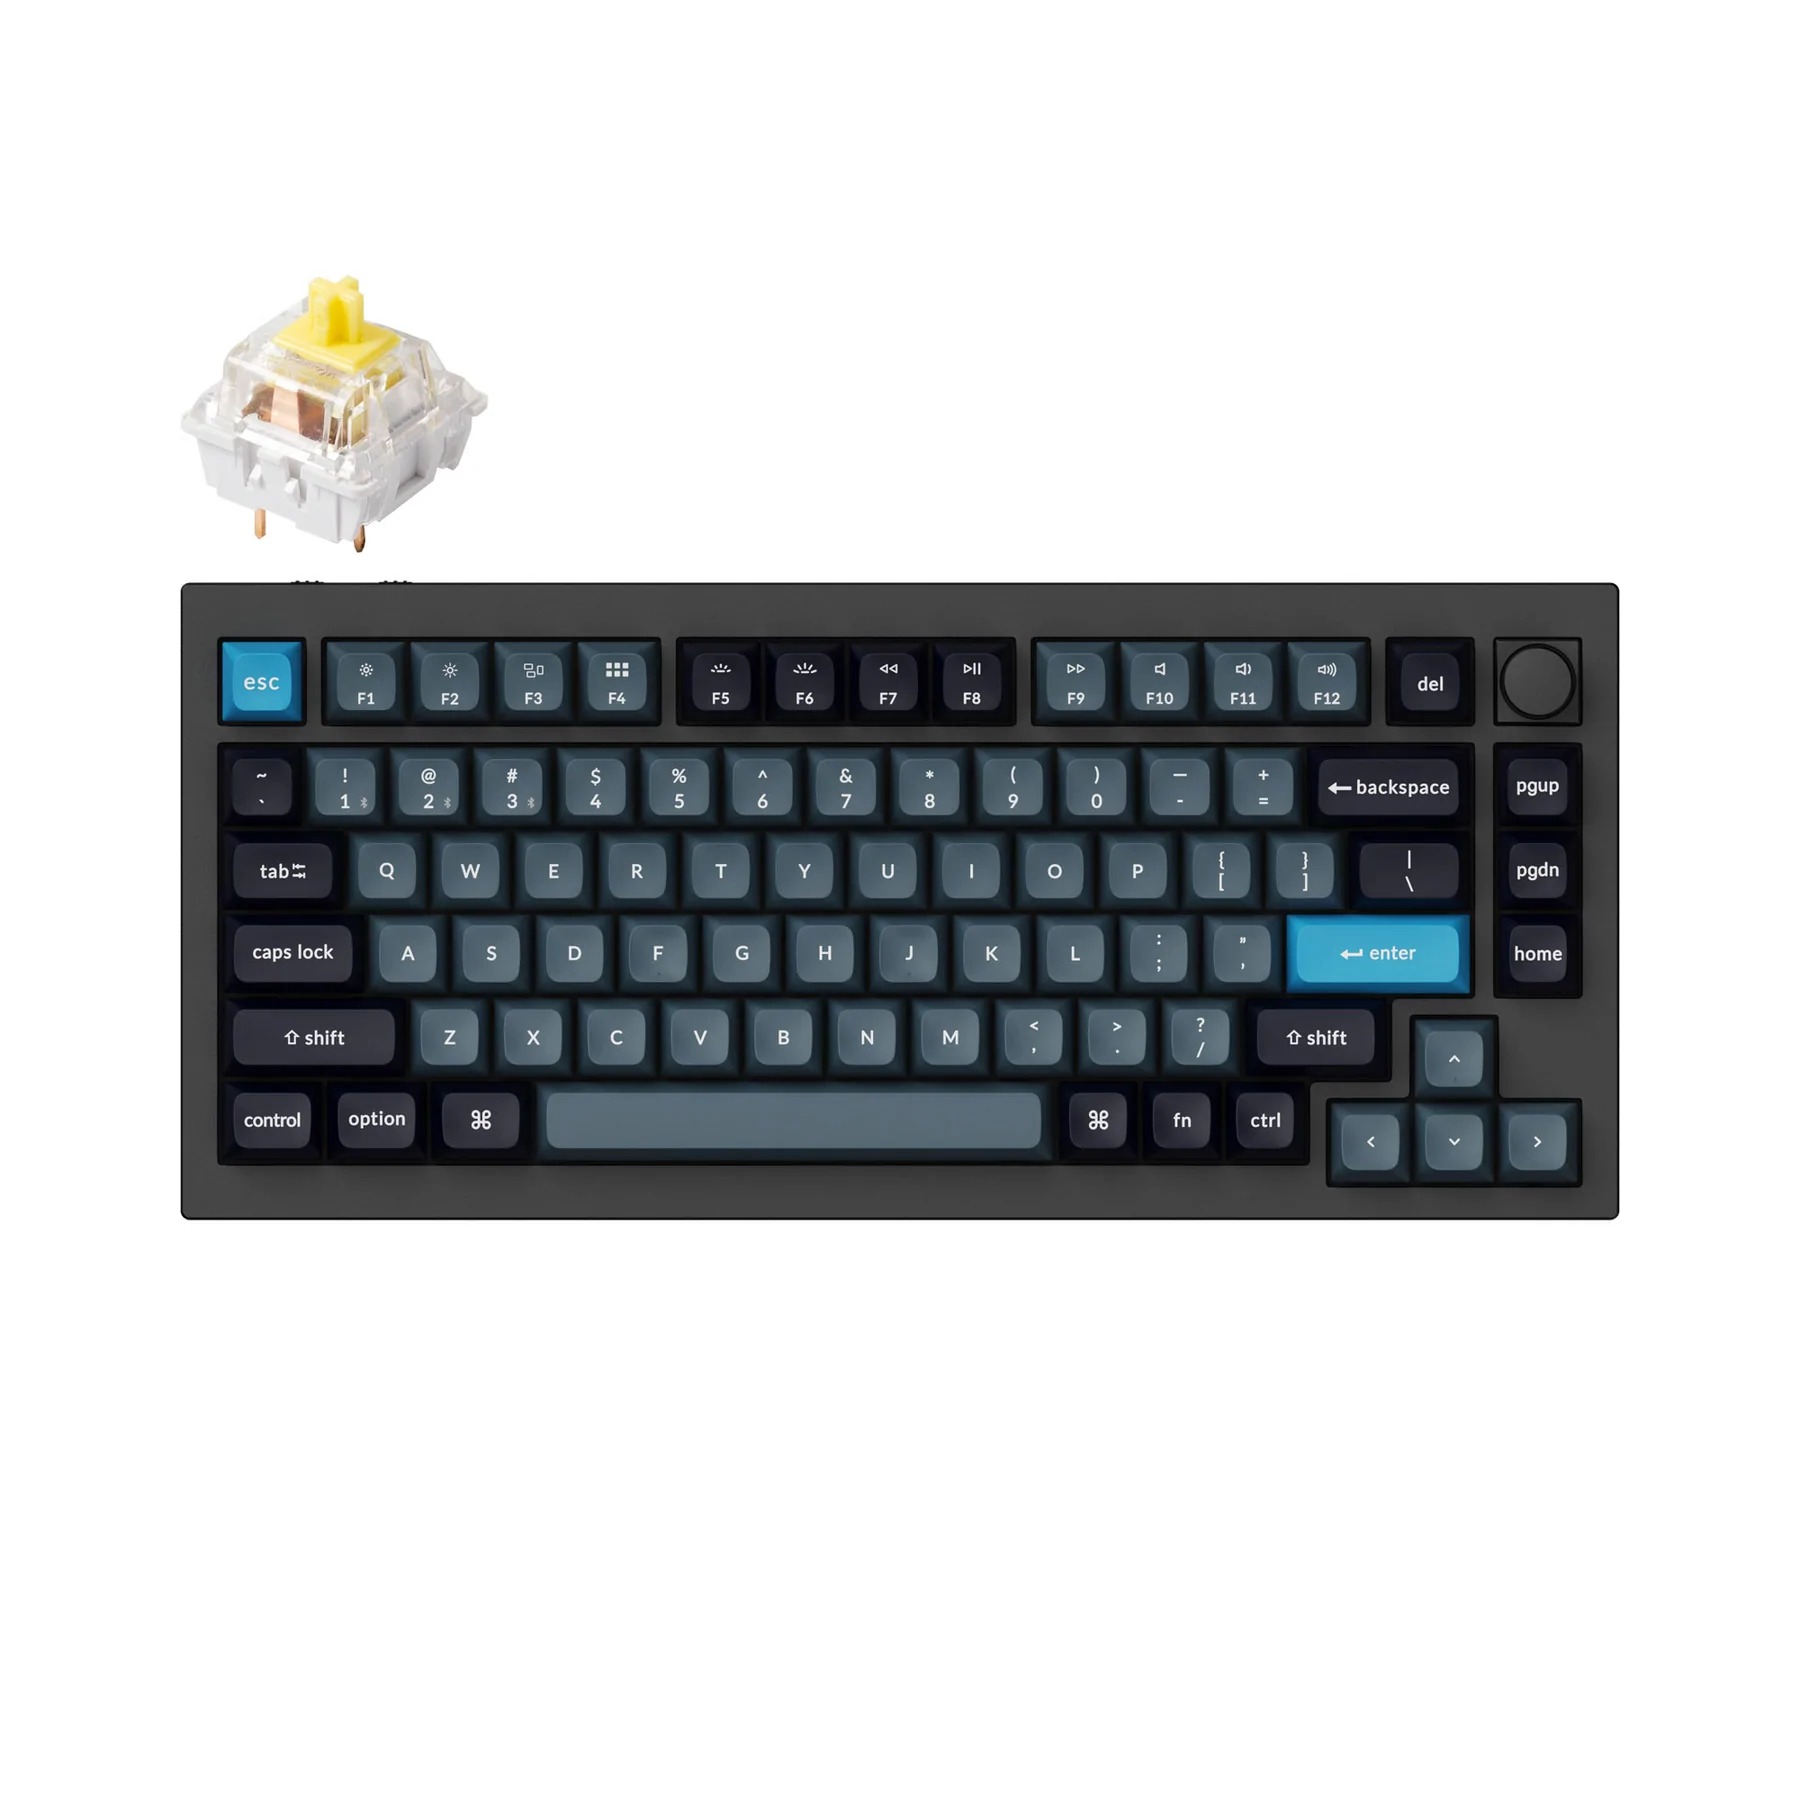 Keychron Q1 Pro Keyboard - Best work from home keyboard